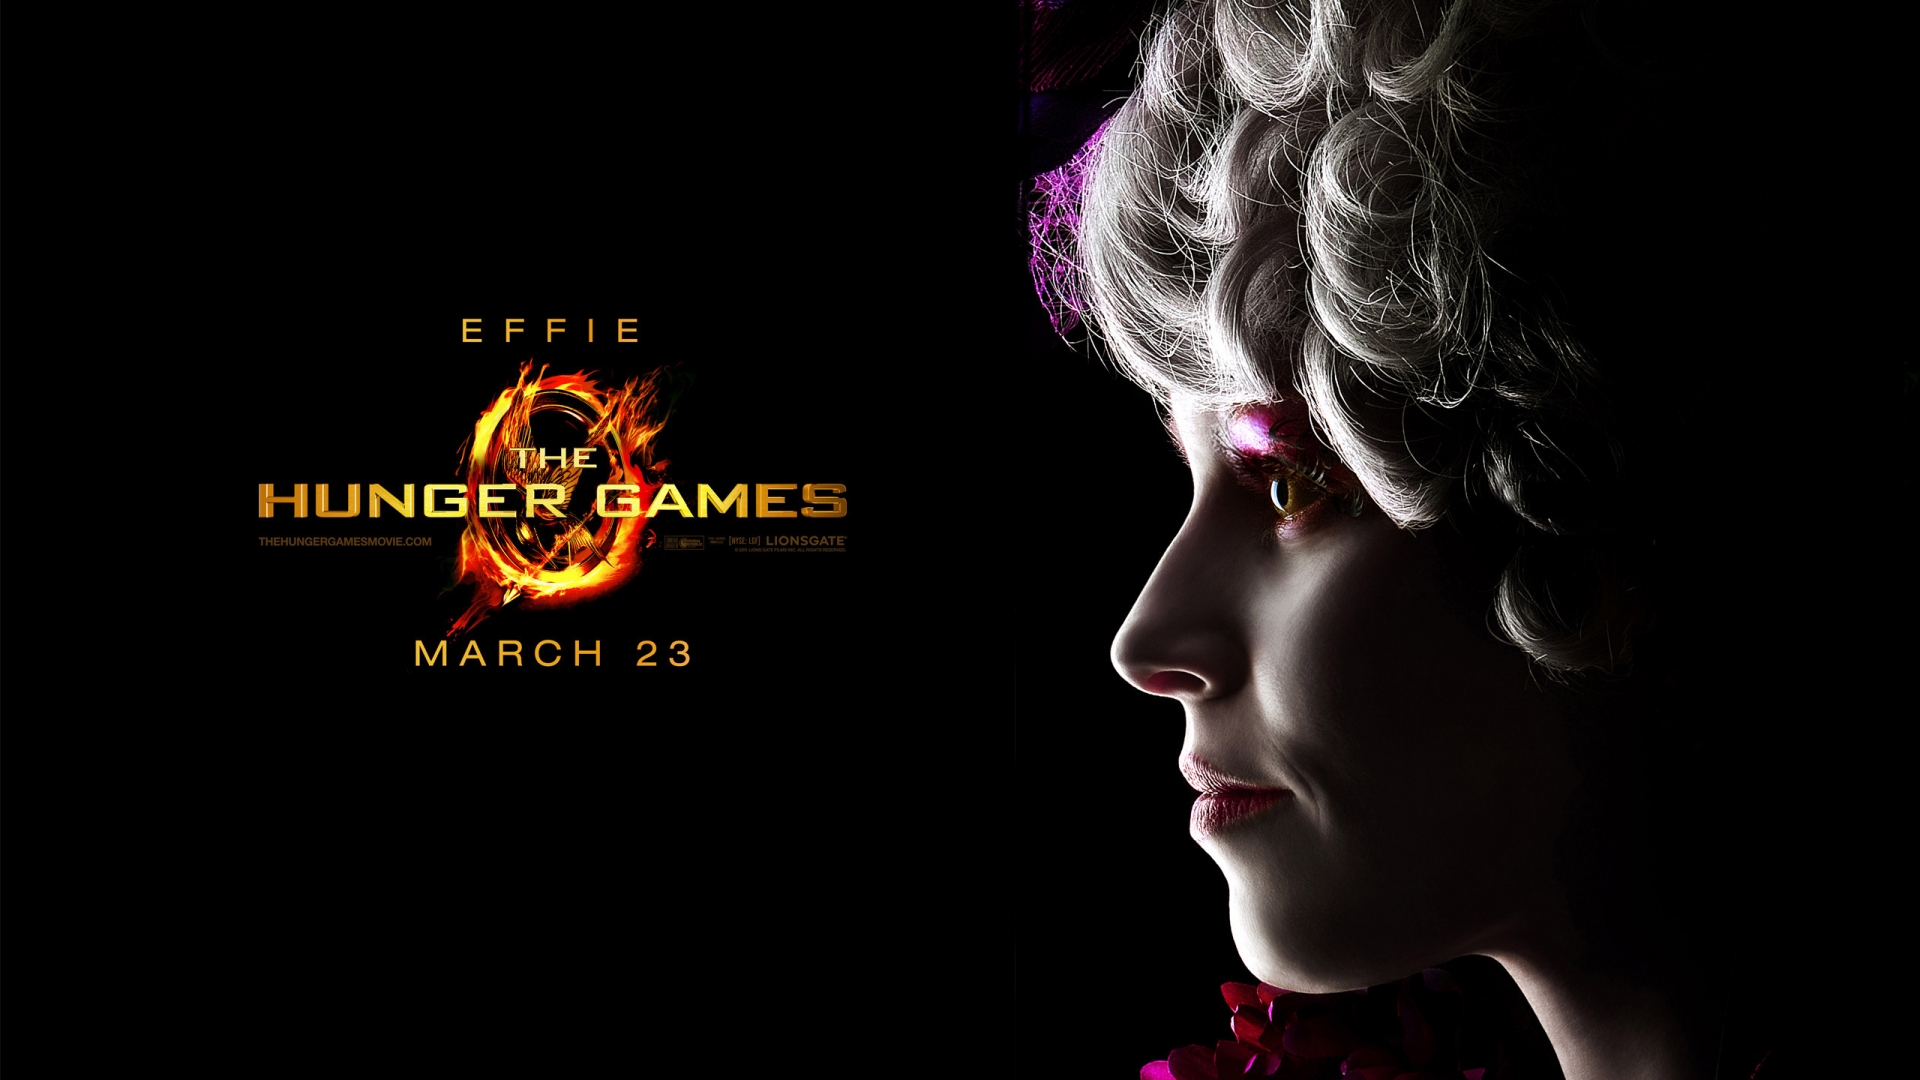 The Hunger Games Effie for 1920 x 1080 HDTV 1080p resolution